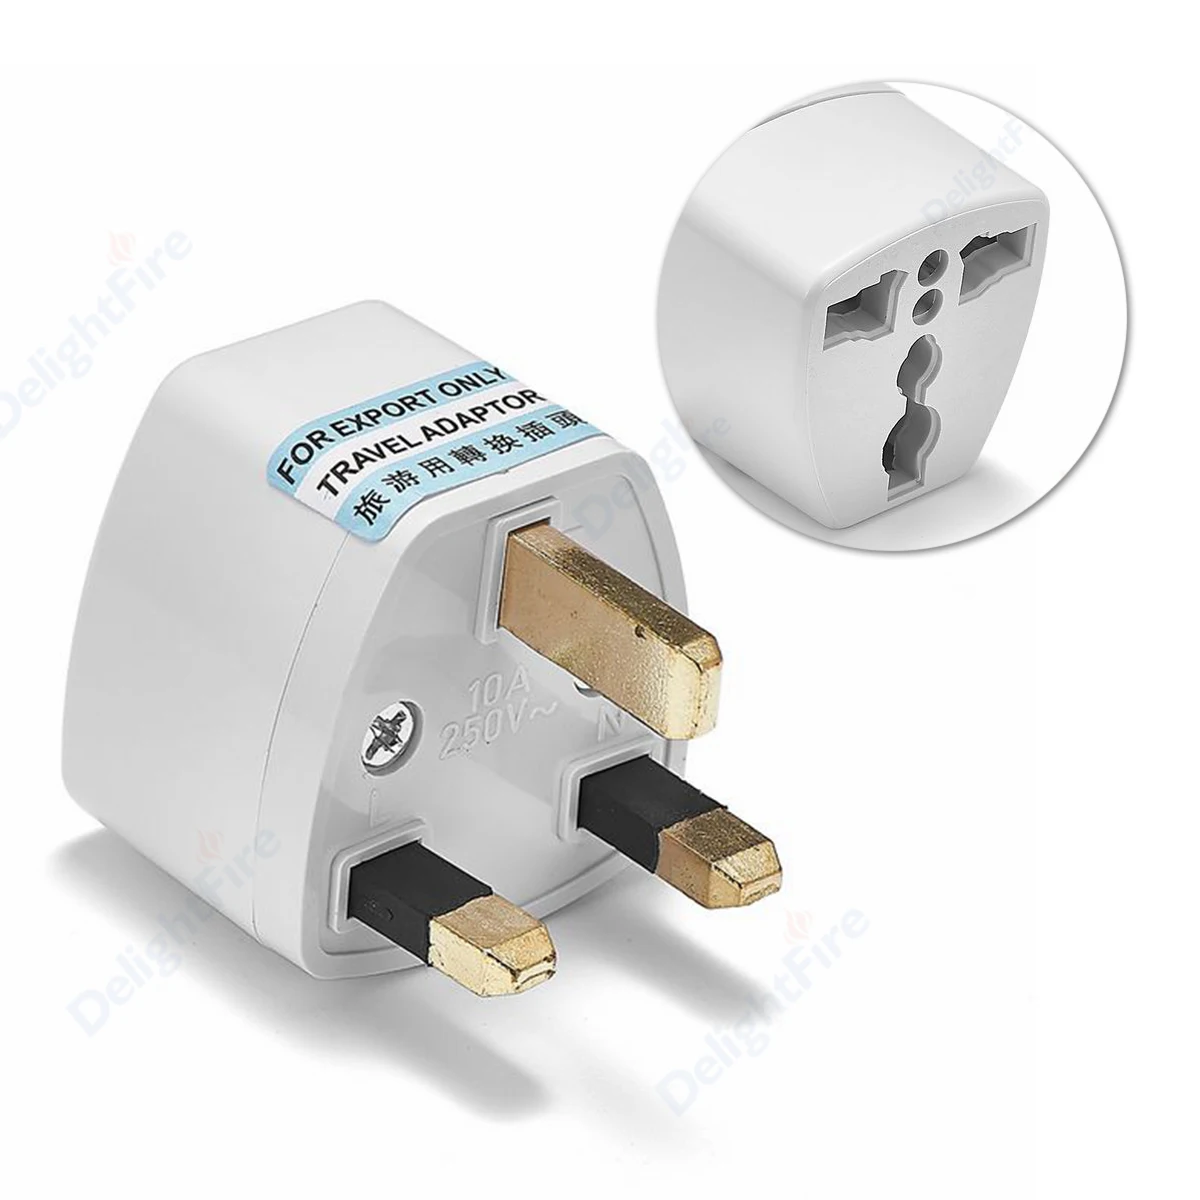 Universal UK Plug Adapter US EU AU To UK Travel Power Adapter Electrical Socket Plug Power Outlet Converter Electric Adaptors